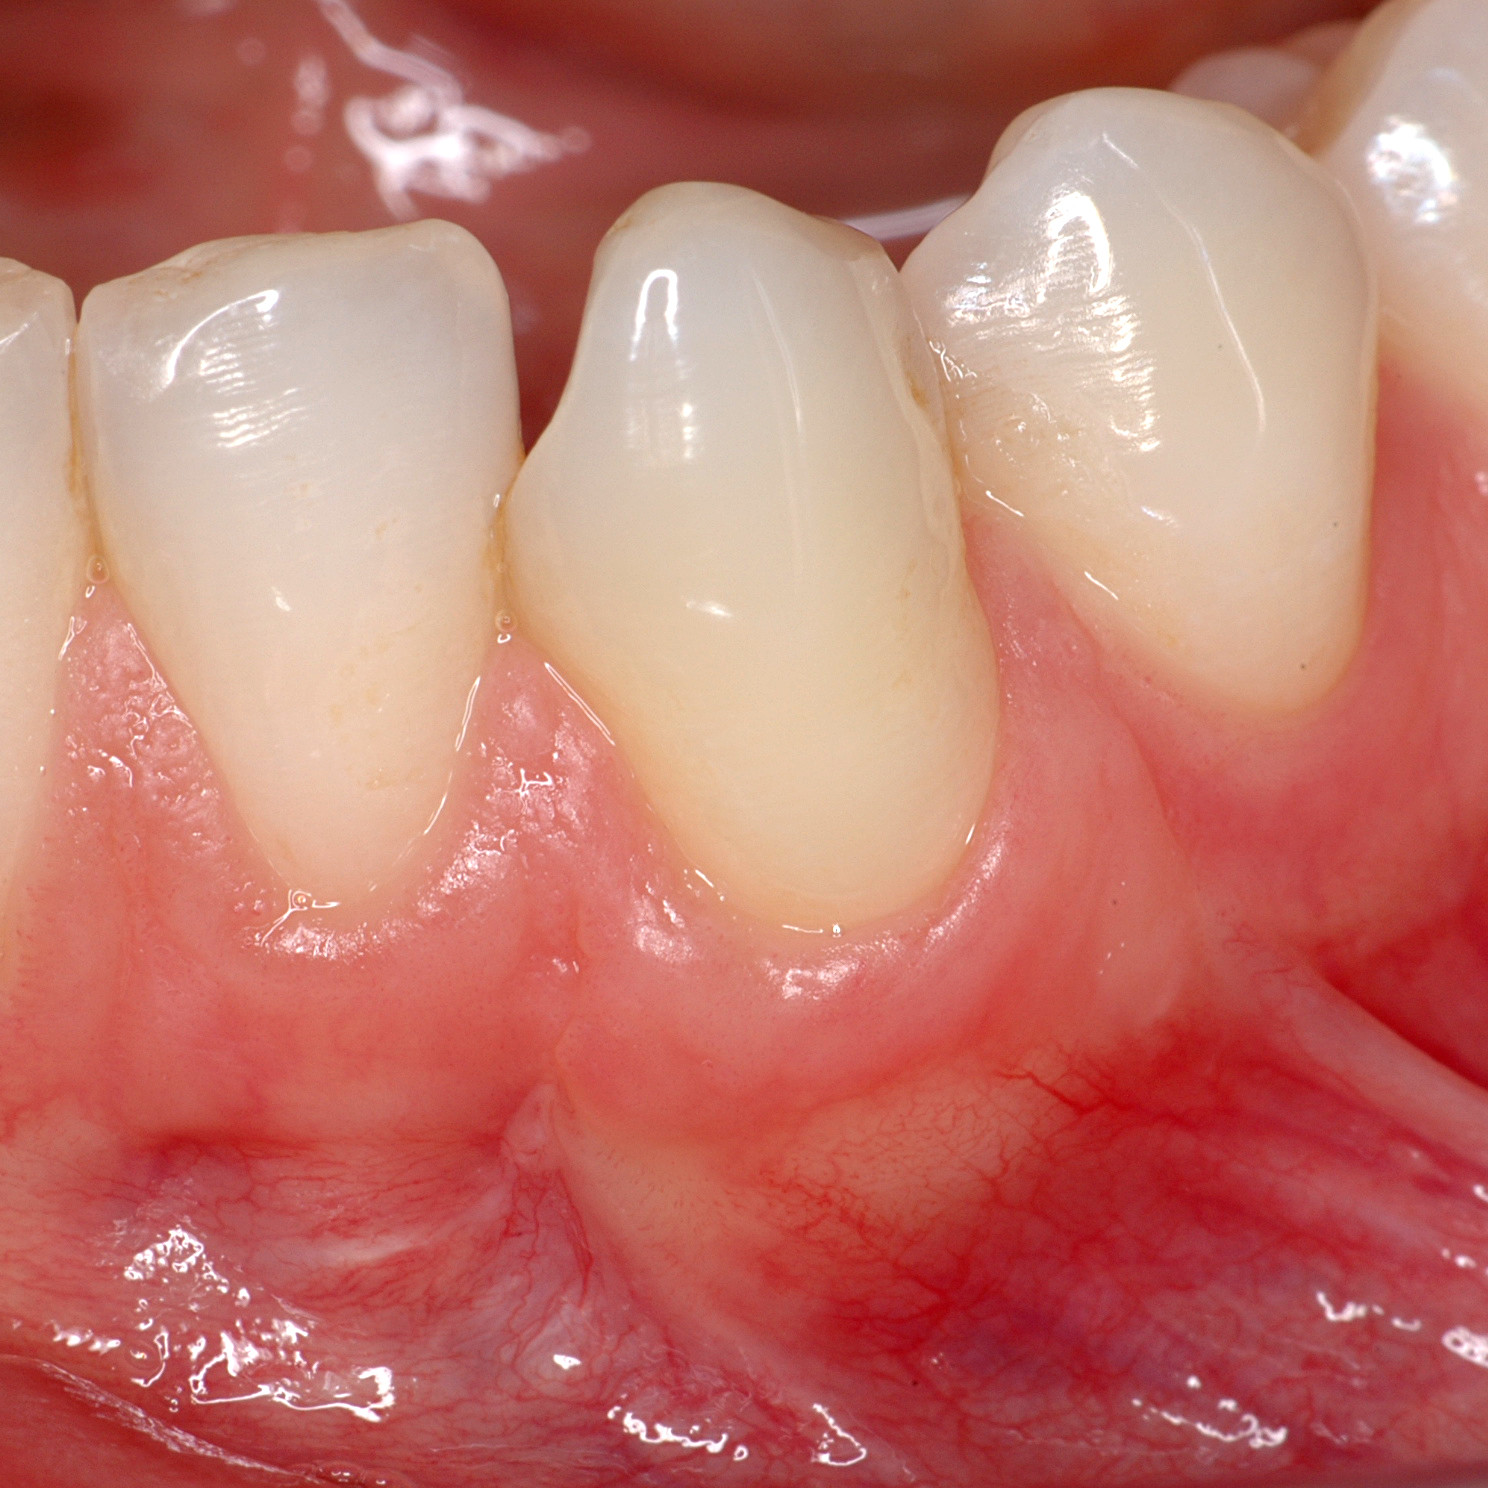 Dental Case Weichgewebe, von Prof. Pilloni: Gingivarezession